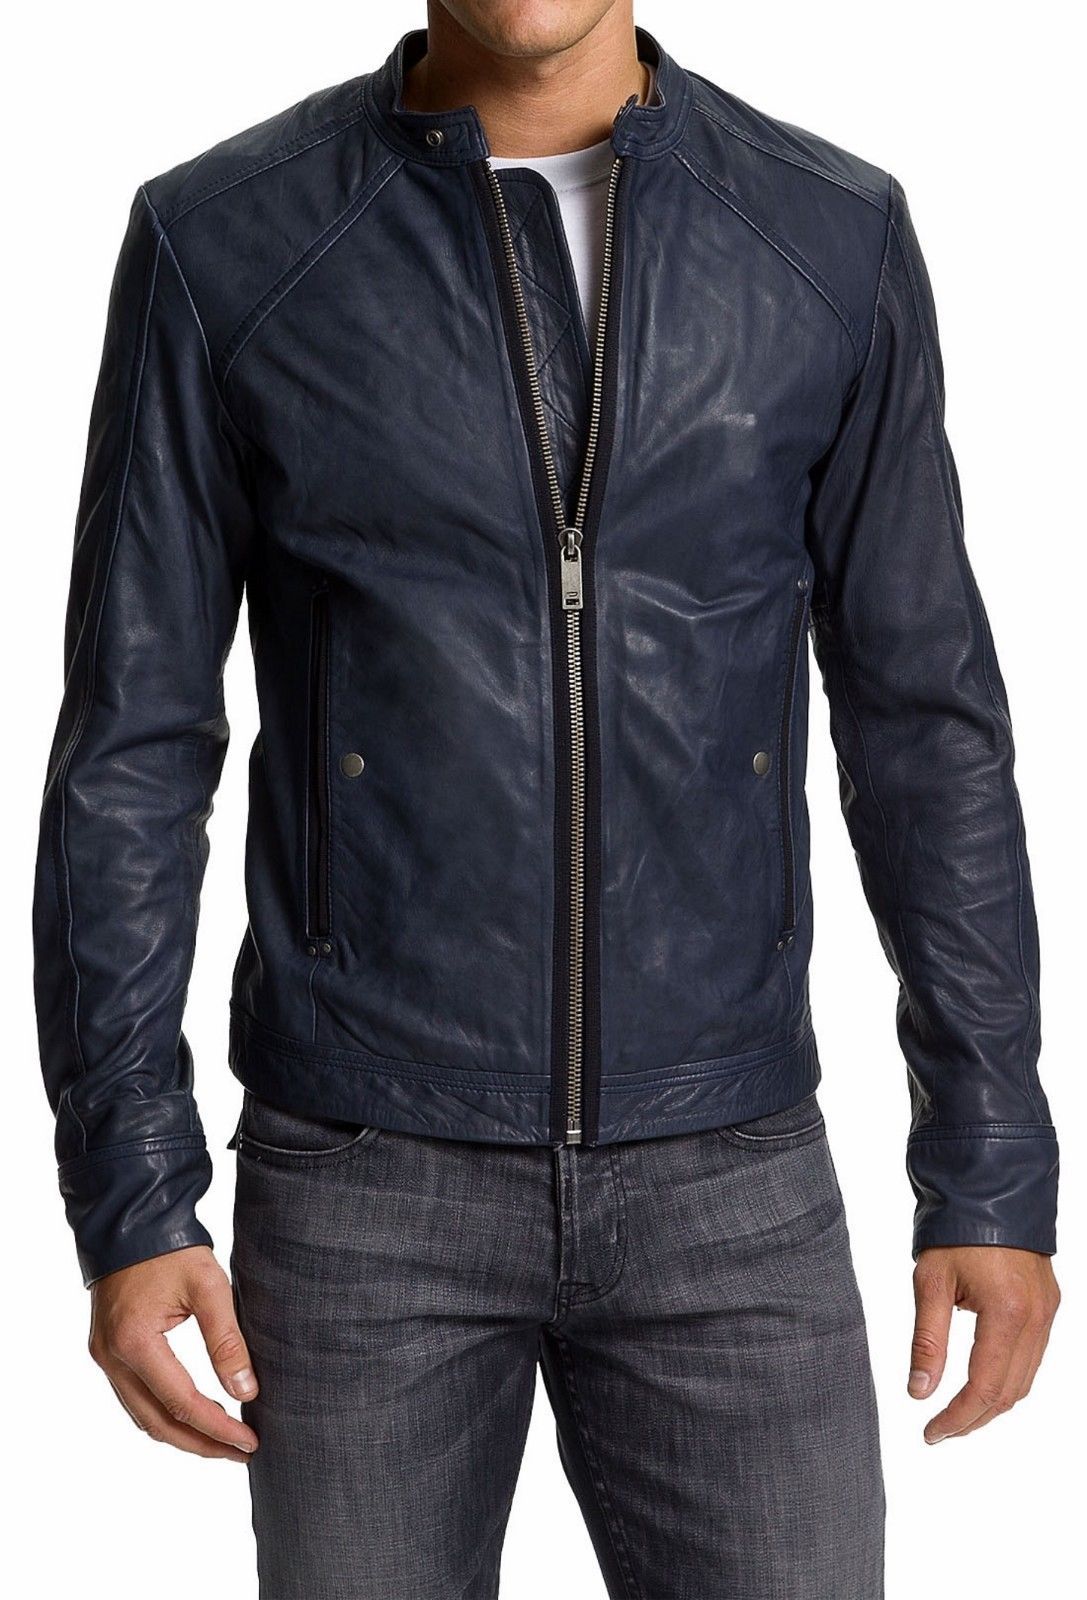 Mans navy blue slimfit jacket, Mens leather jacket, Leather jackets for ...